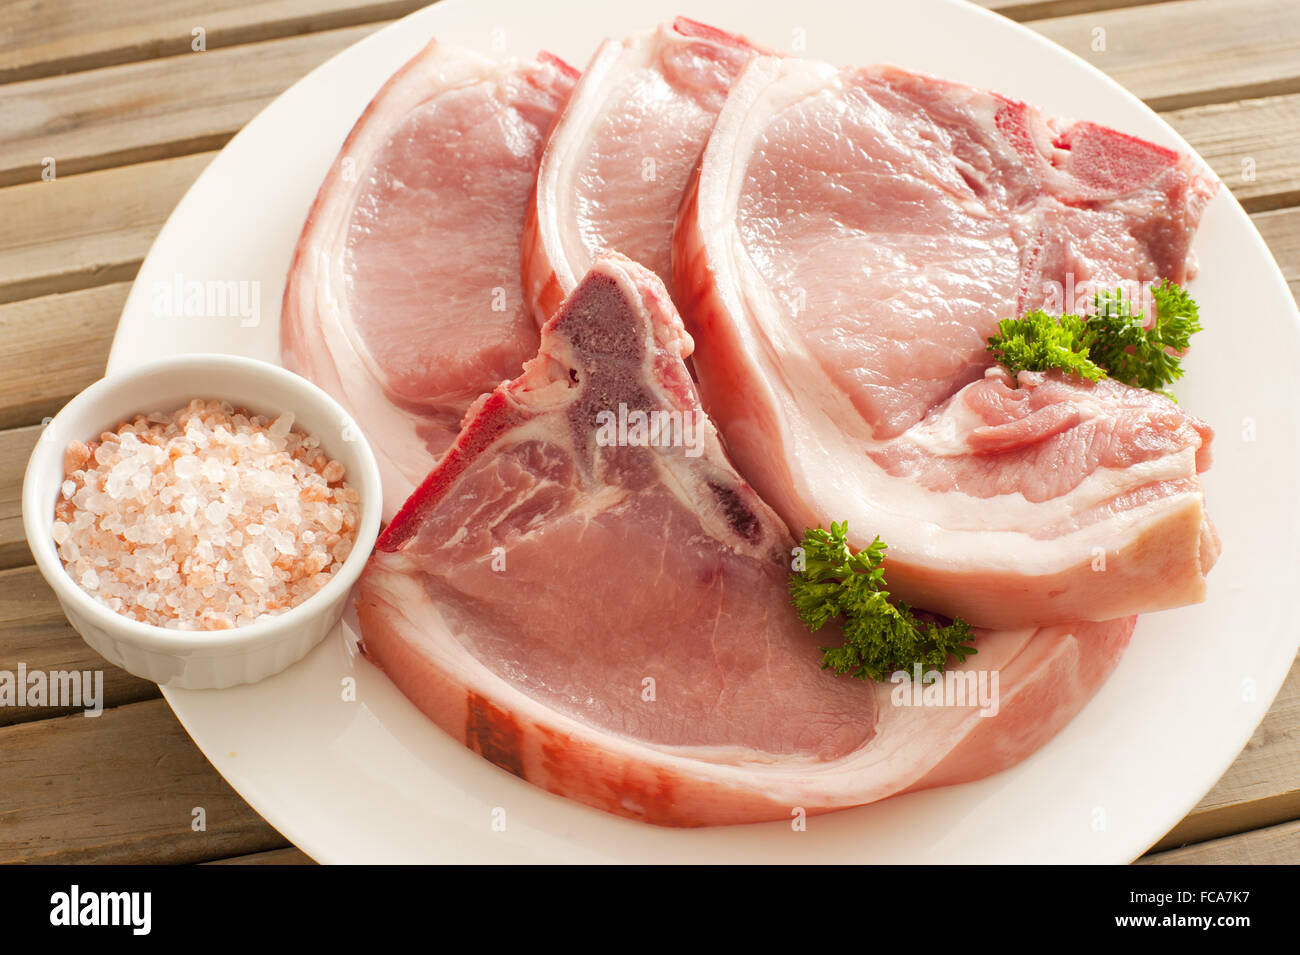 Fresh Pork Chops on Plate with Rock Salt Stock Photo